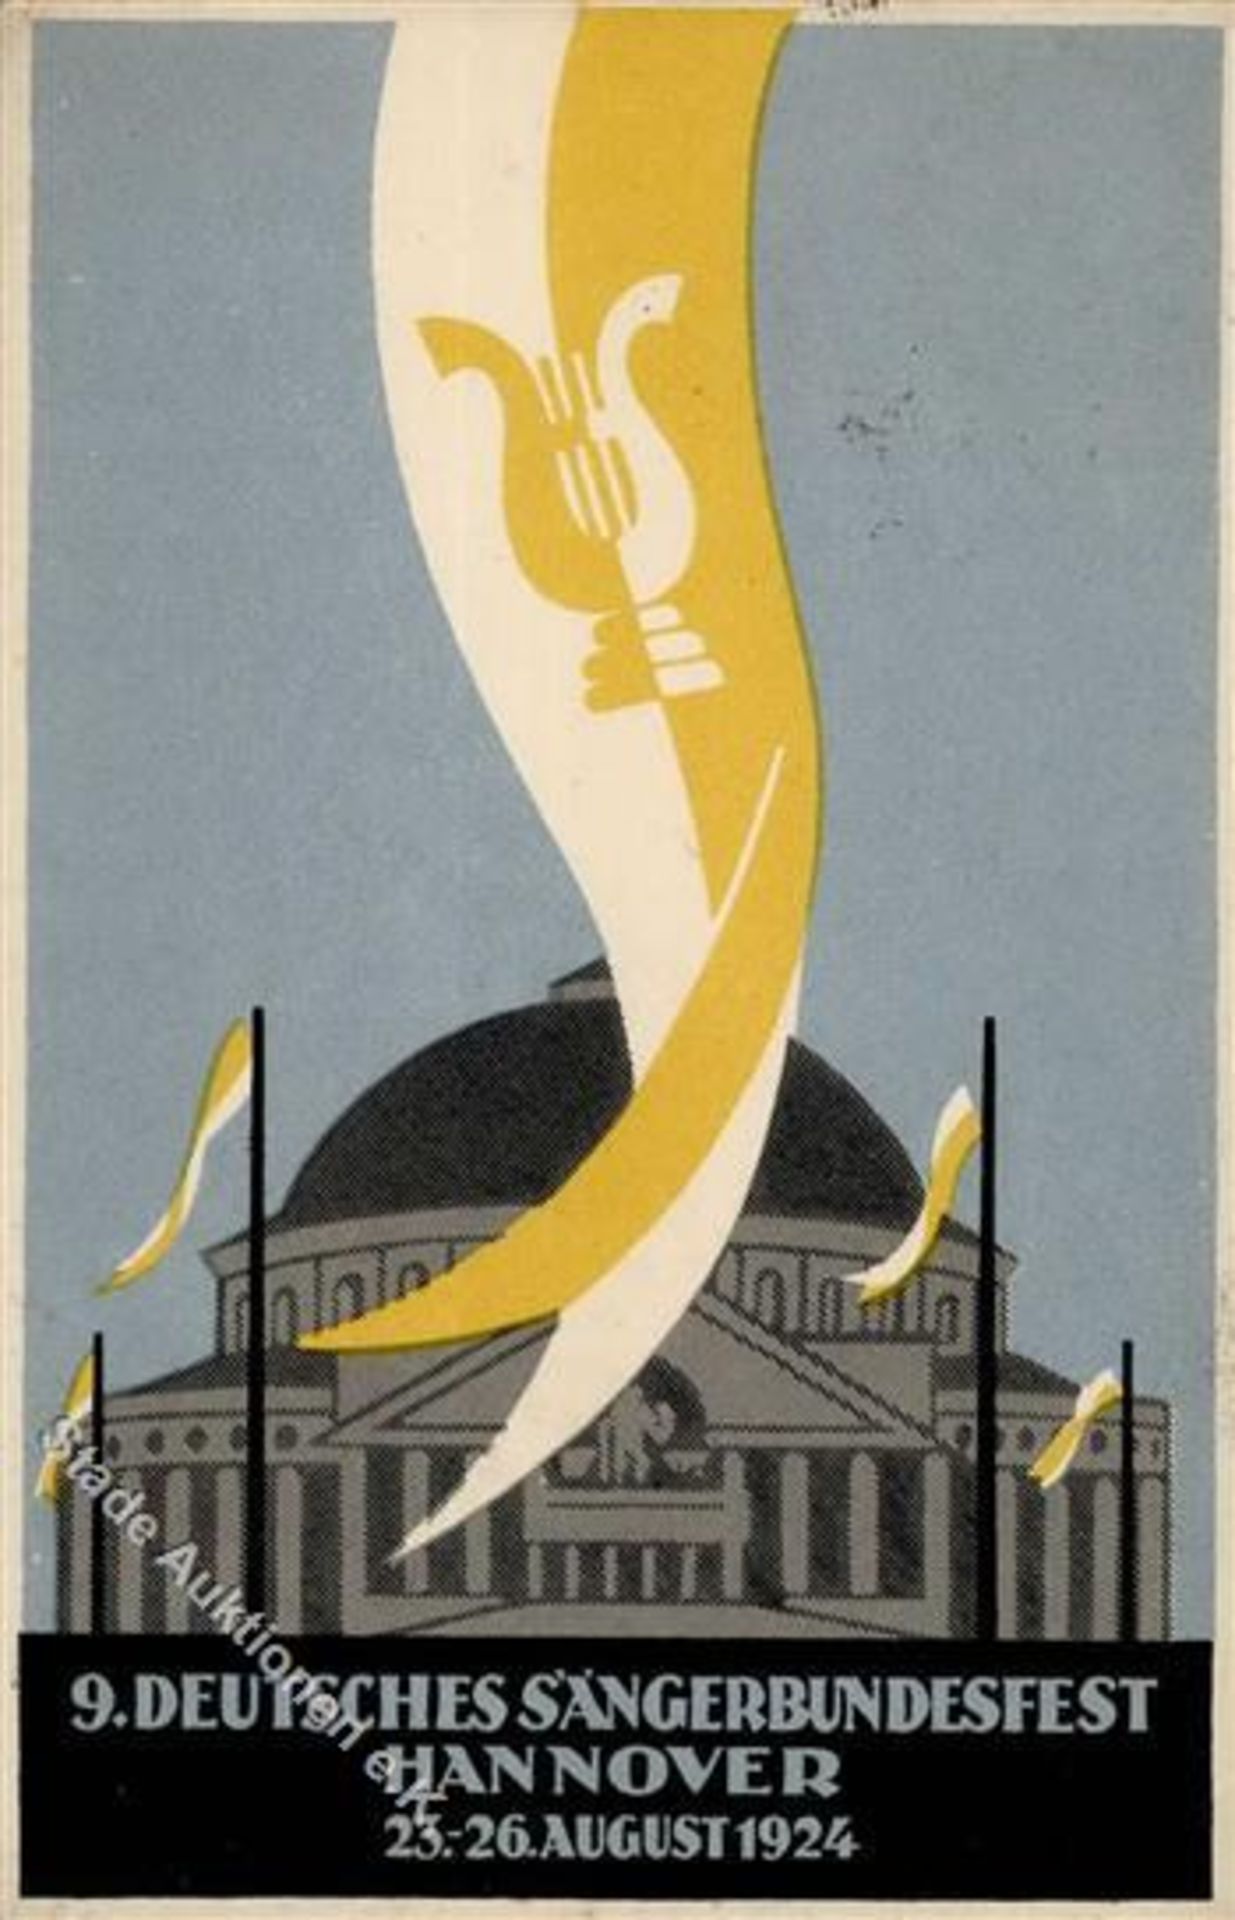 HANNOVER (3000) - 9. DEUTSCHES SÄNGERBUNDESFEST 1924 - dekorative Festpostkarte I-IIDieses Los